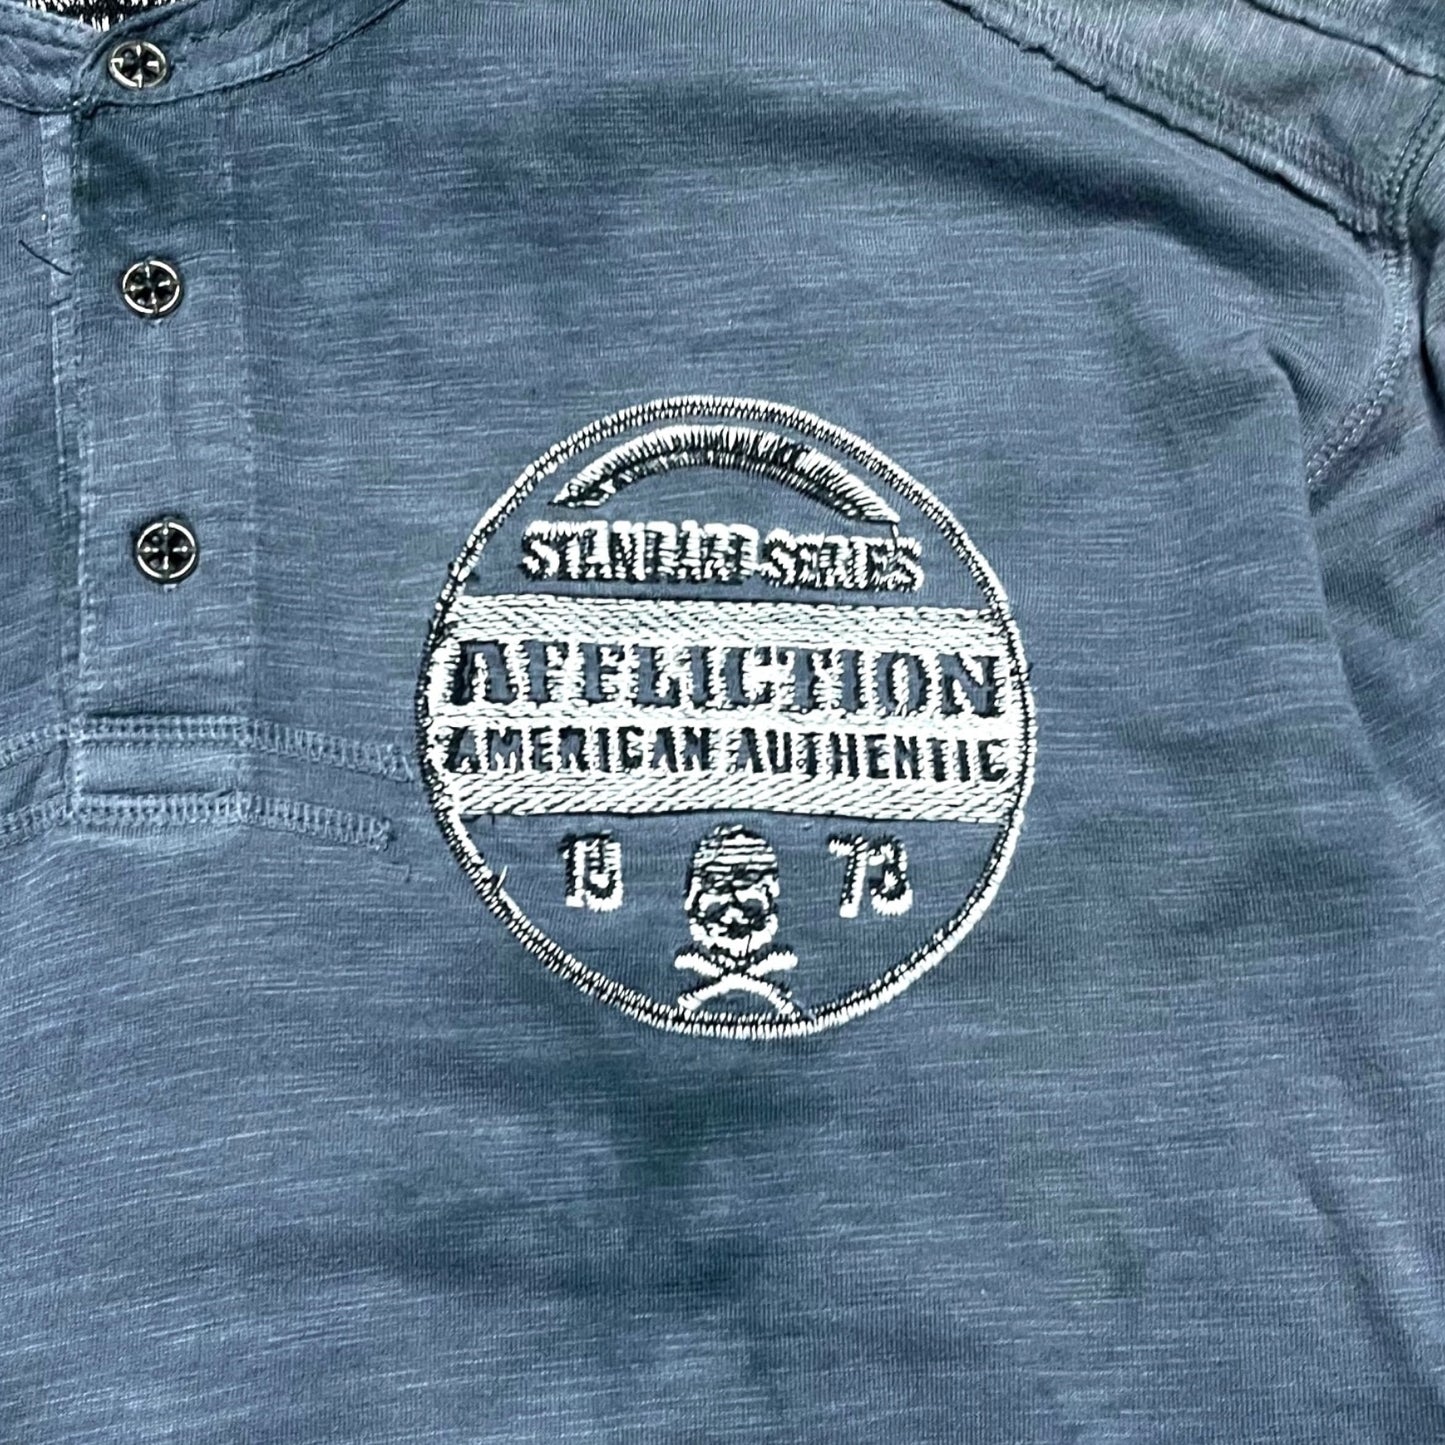 "AFFLICTION" Tie-dye pattern henry neck l/s t-shirt